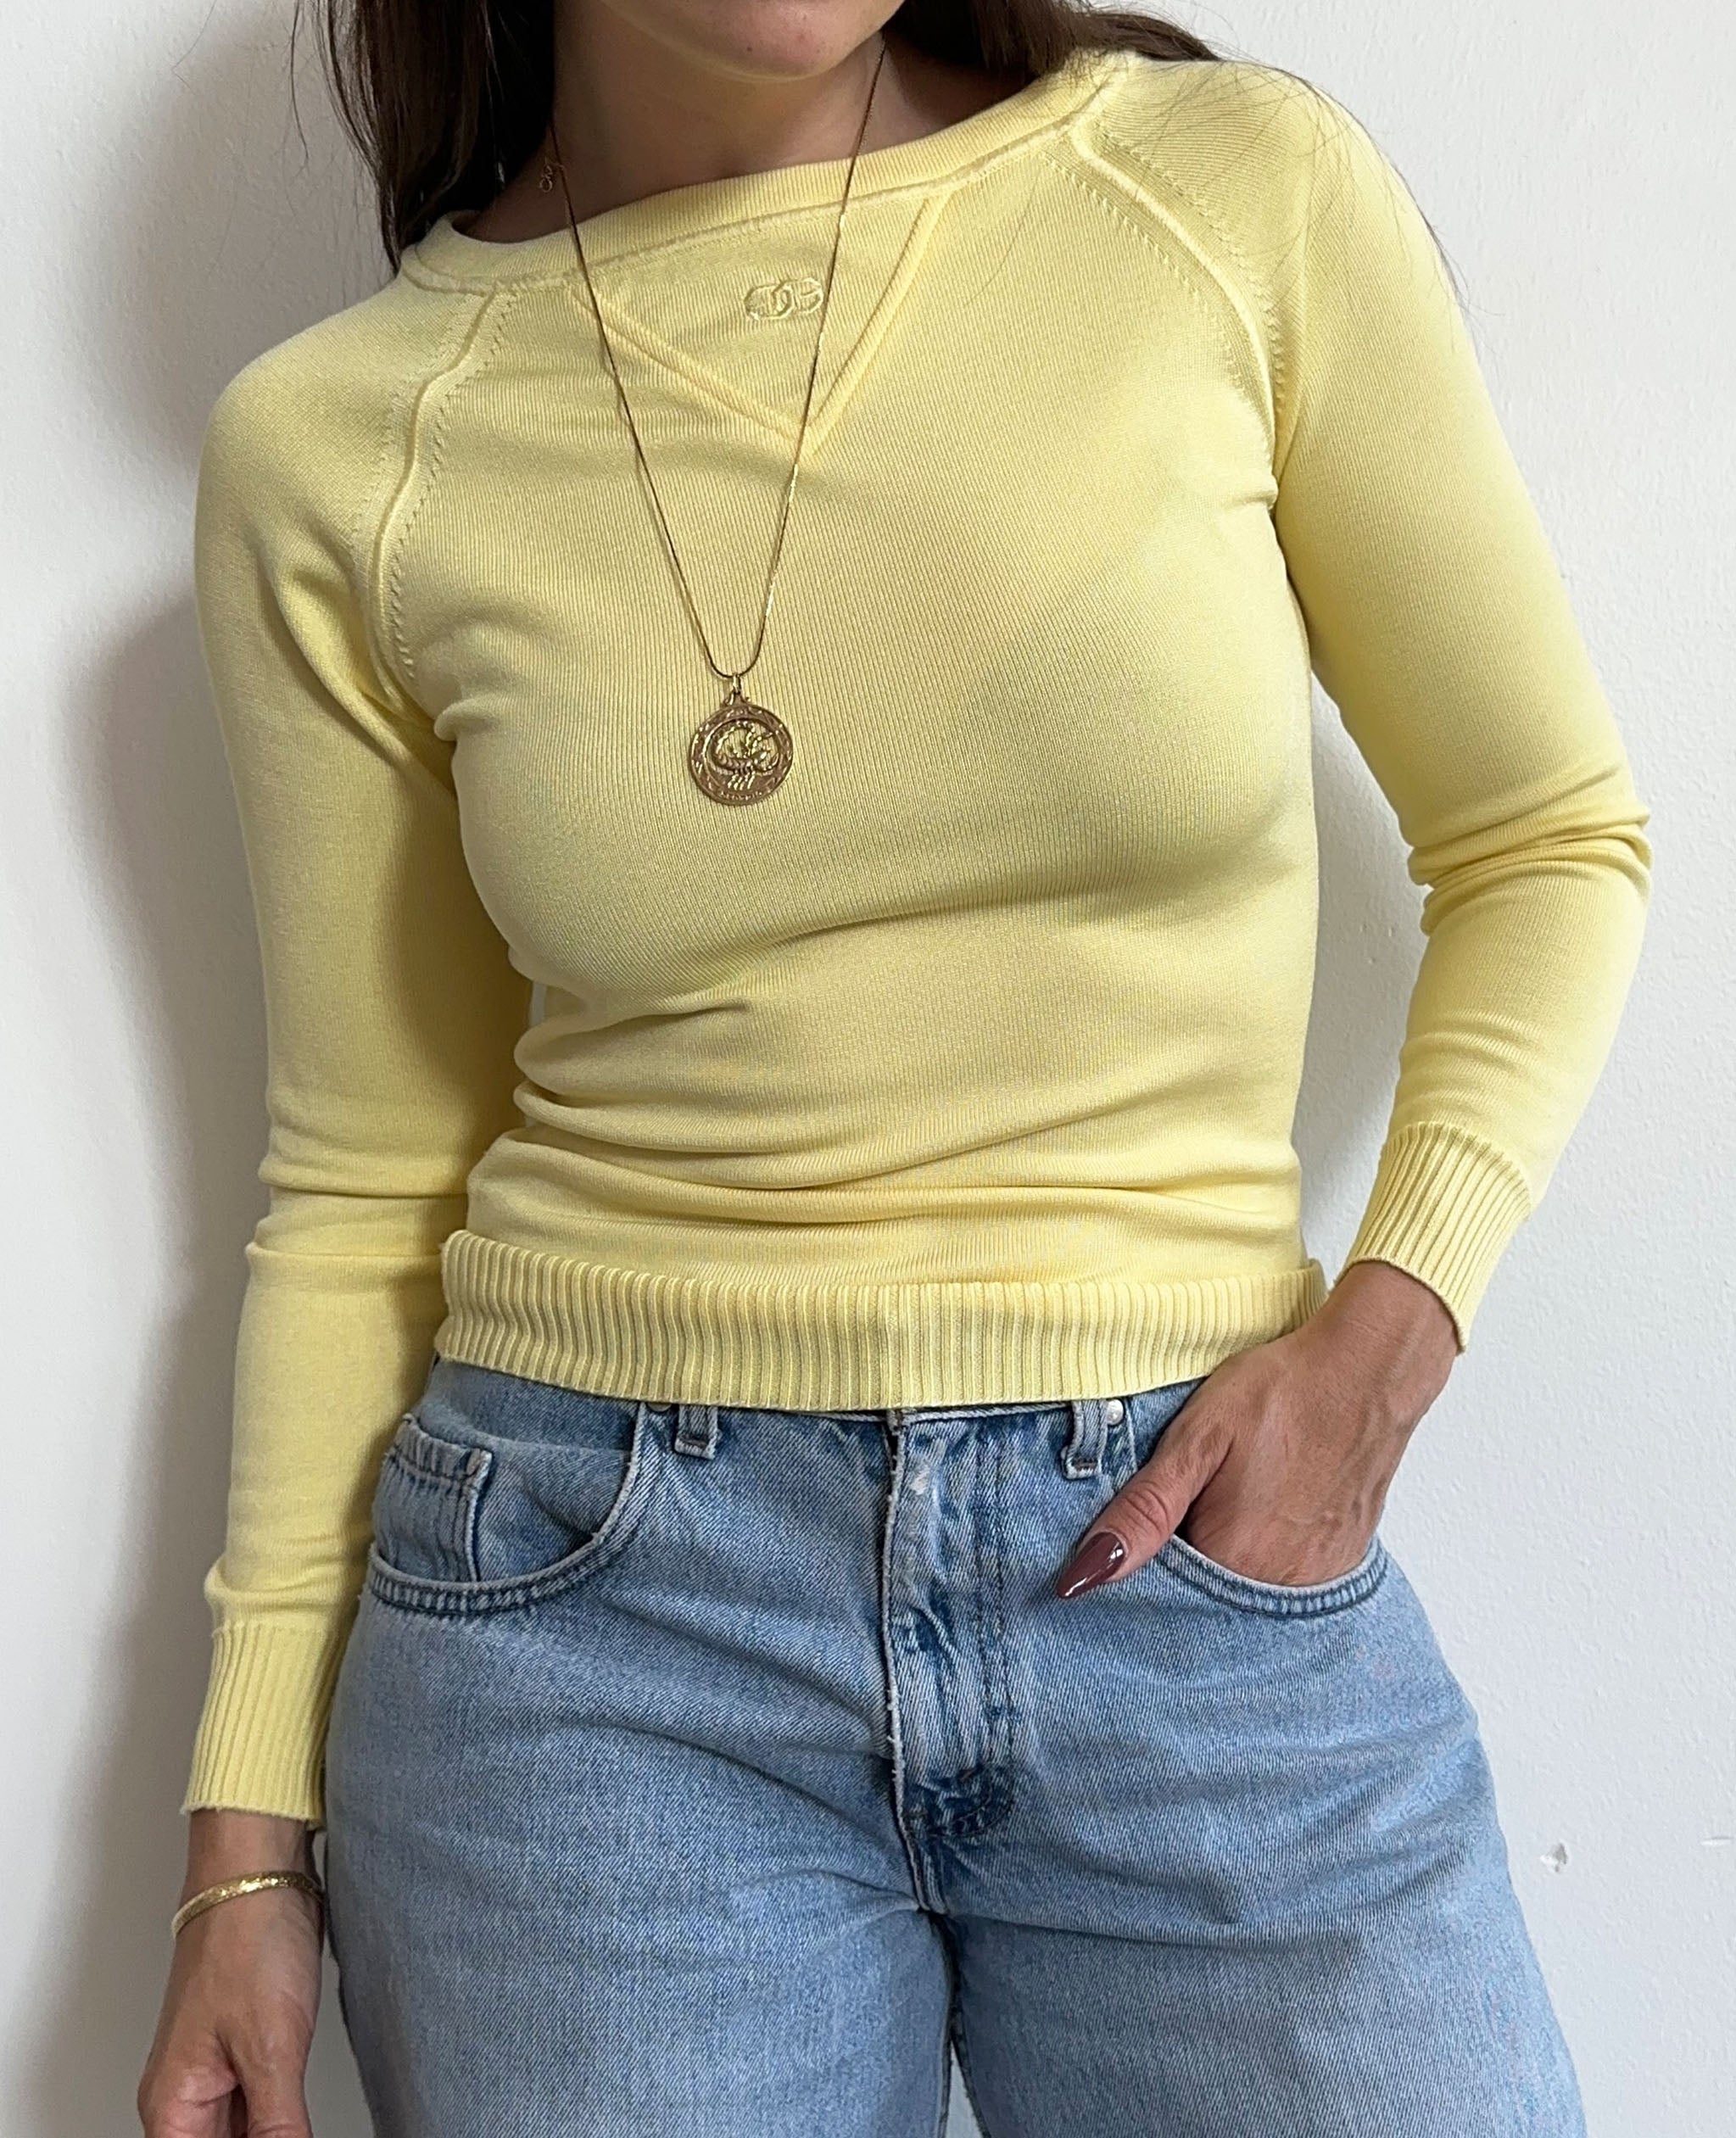 Buttercream Yellow Sweater